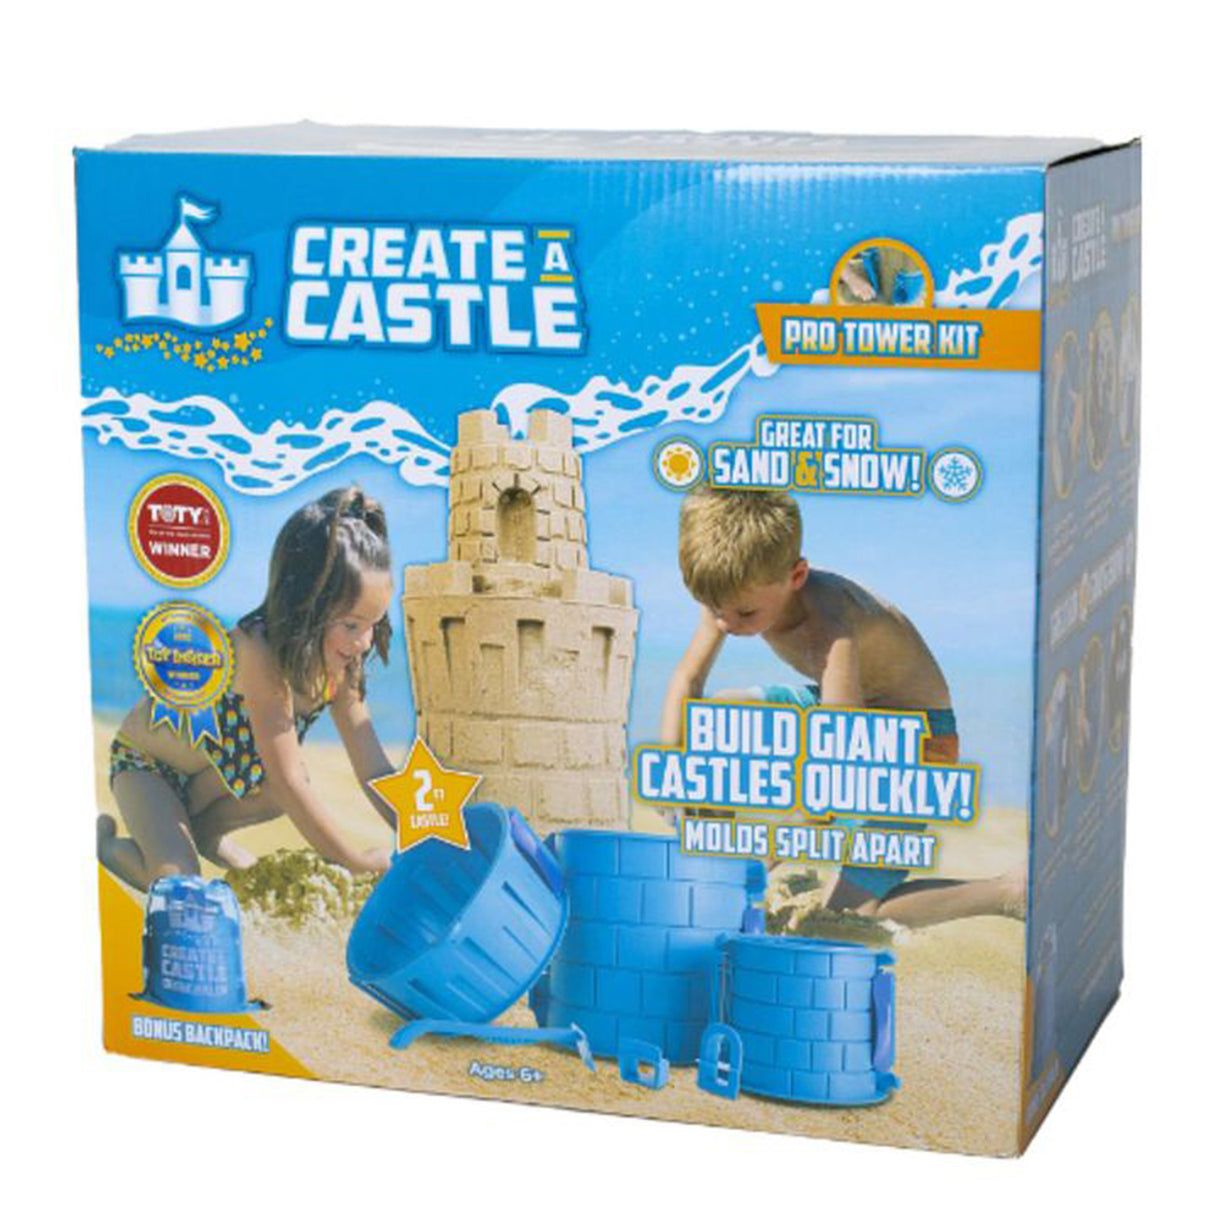 Pro Tower Kit Create a Castle - Pro Kit